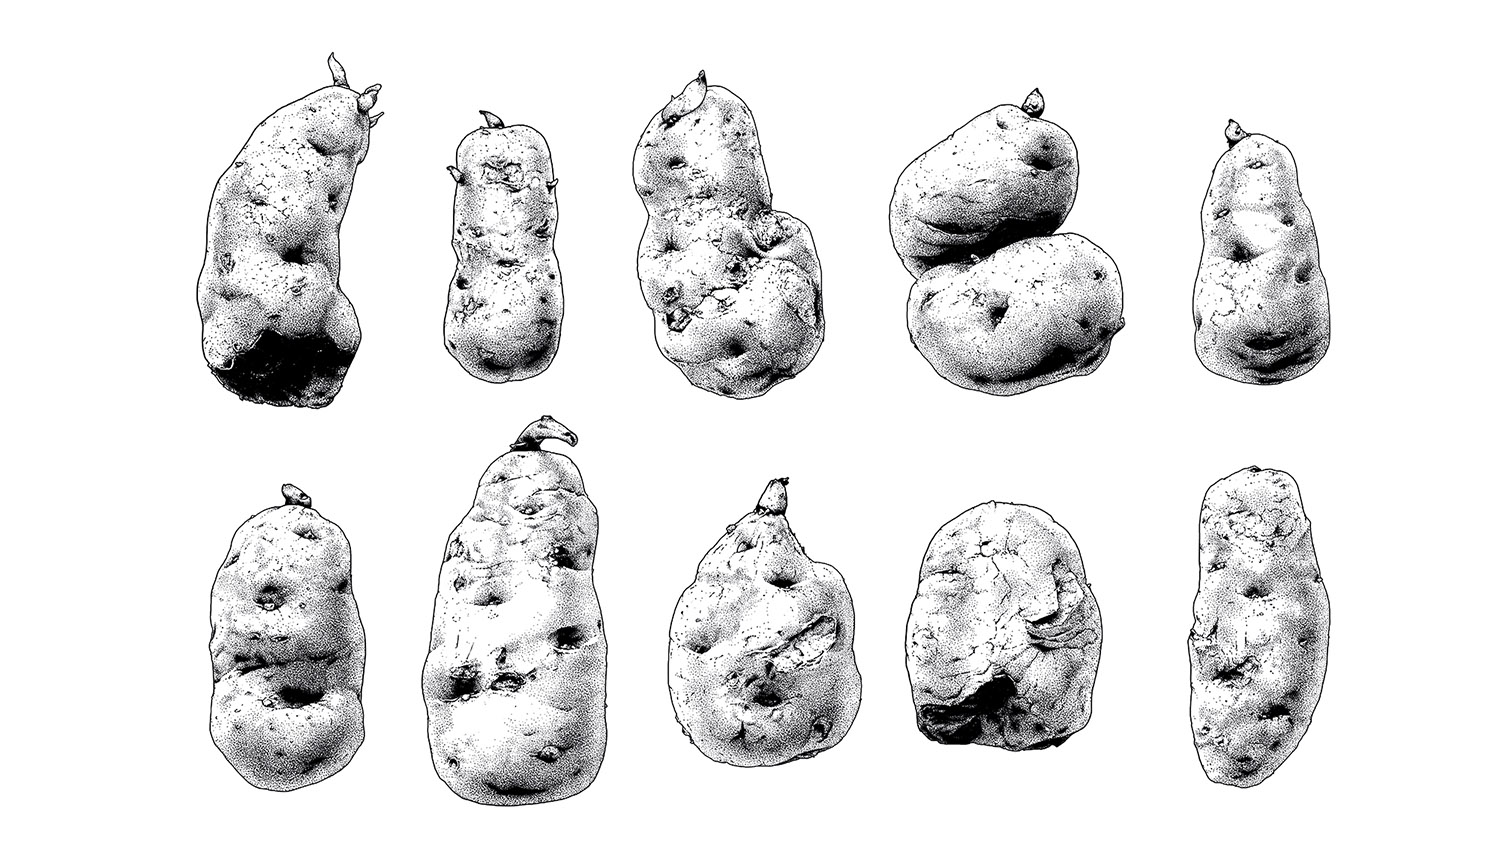 Kartoffelkonvolut 02 / 80x60cm, Serigrafie, handgedruckt, 1. Auflage (10er), 2016